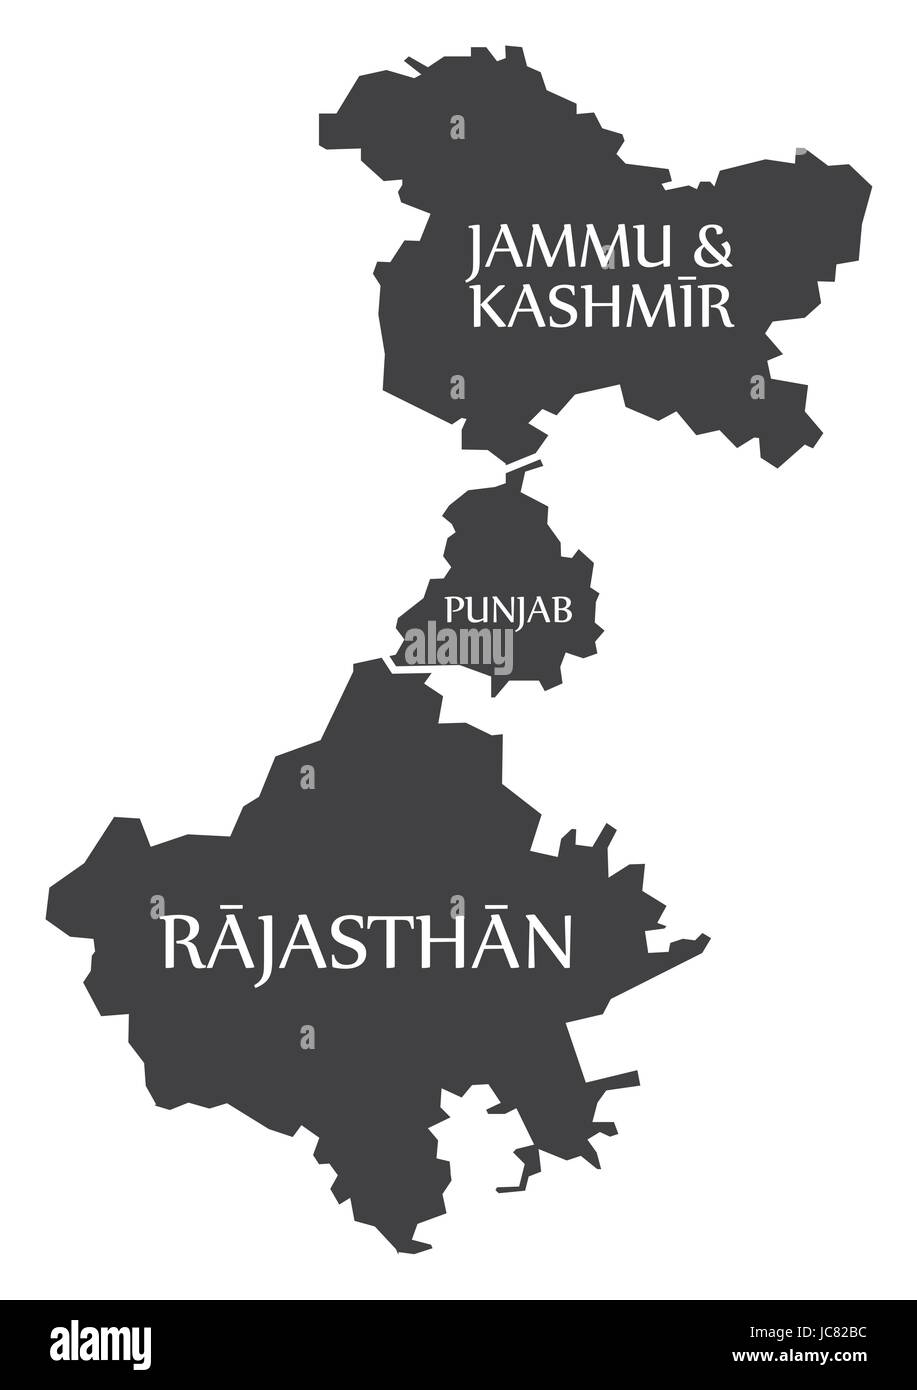 Jammu and Kashmir - Punjab - Rajasthan Map Illustration of Indian states Stock Vector